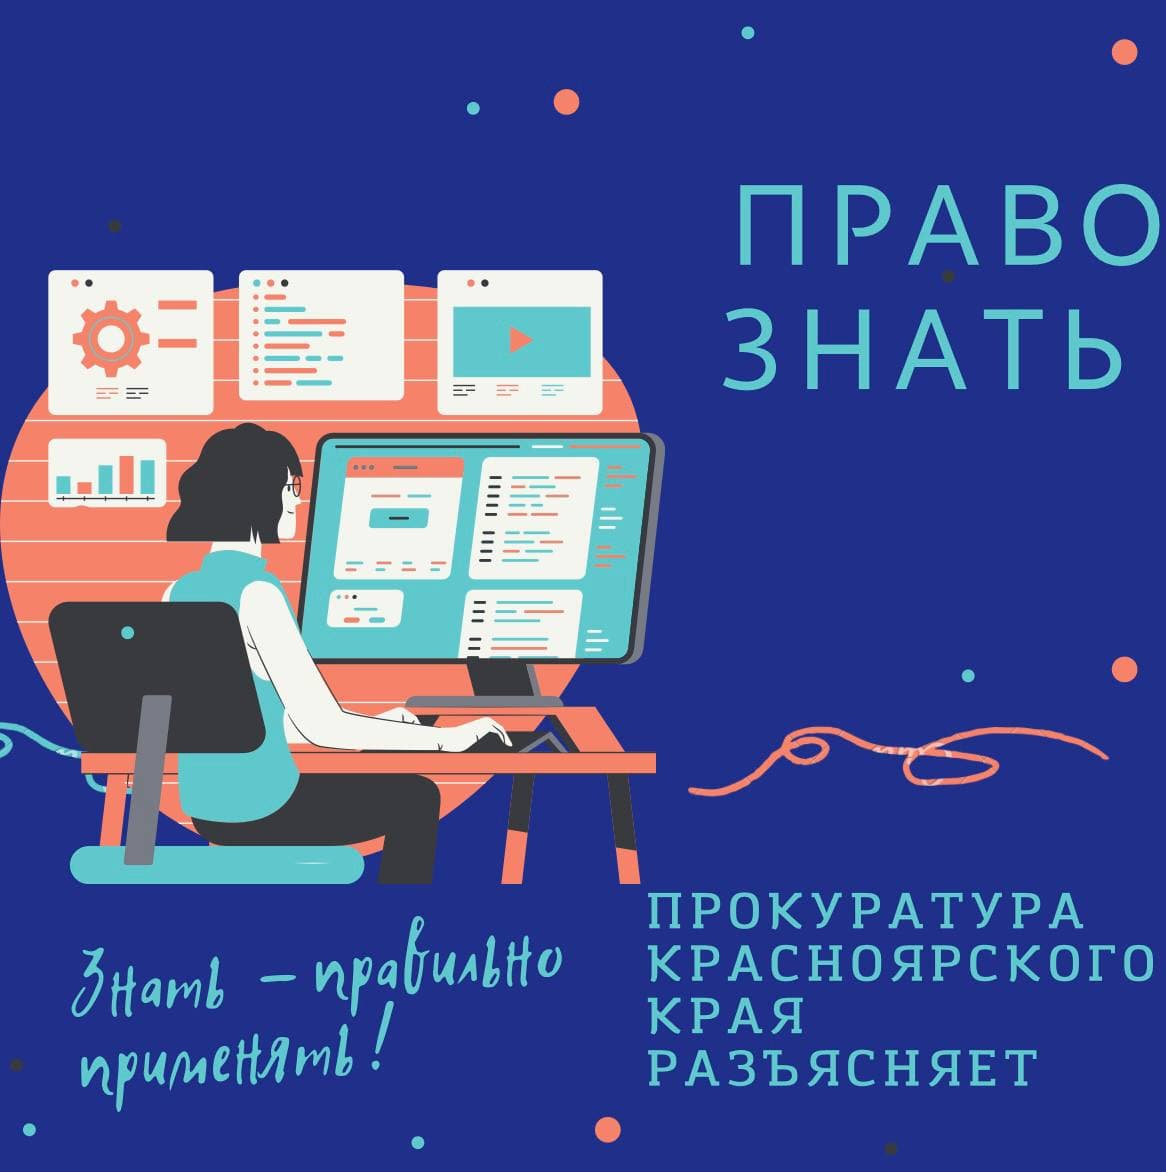 Присоединяйтесь к телеграм-каналу прокуратуры Красноярского края!